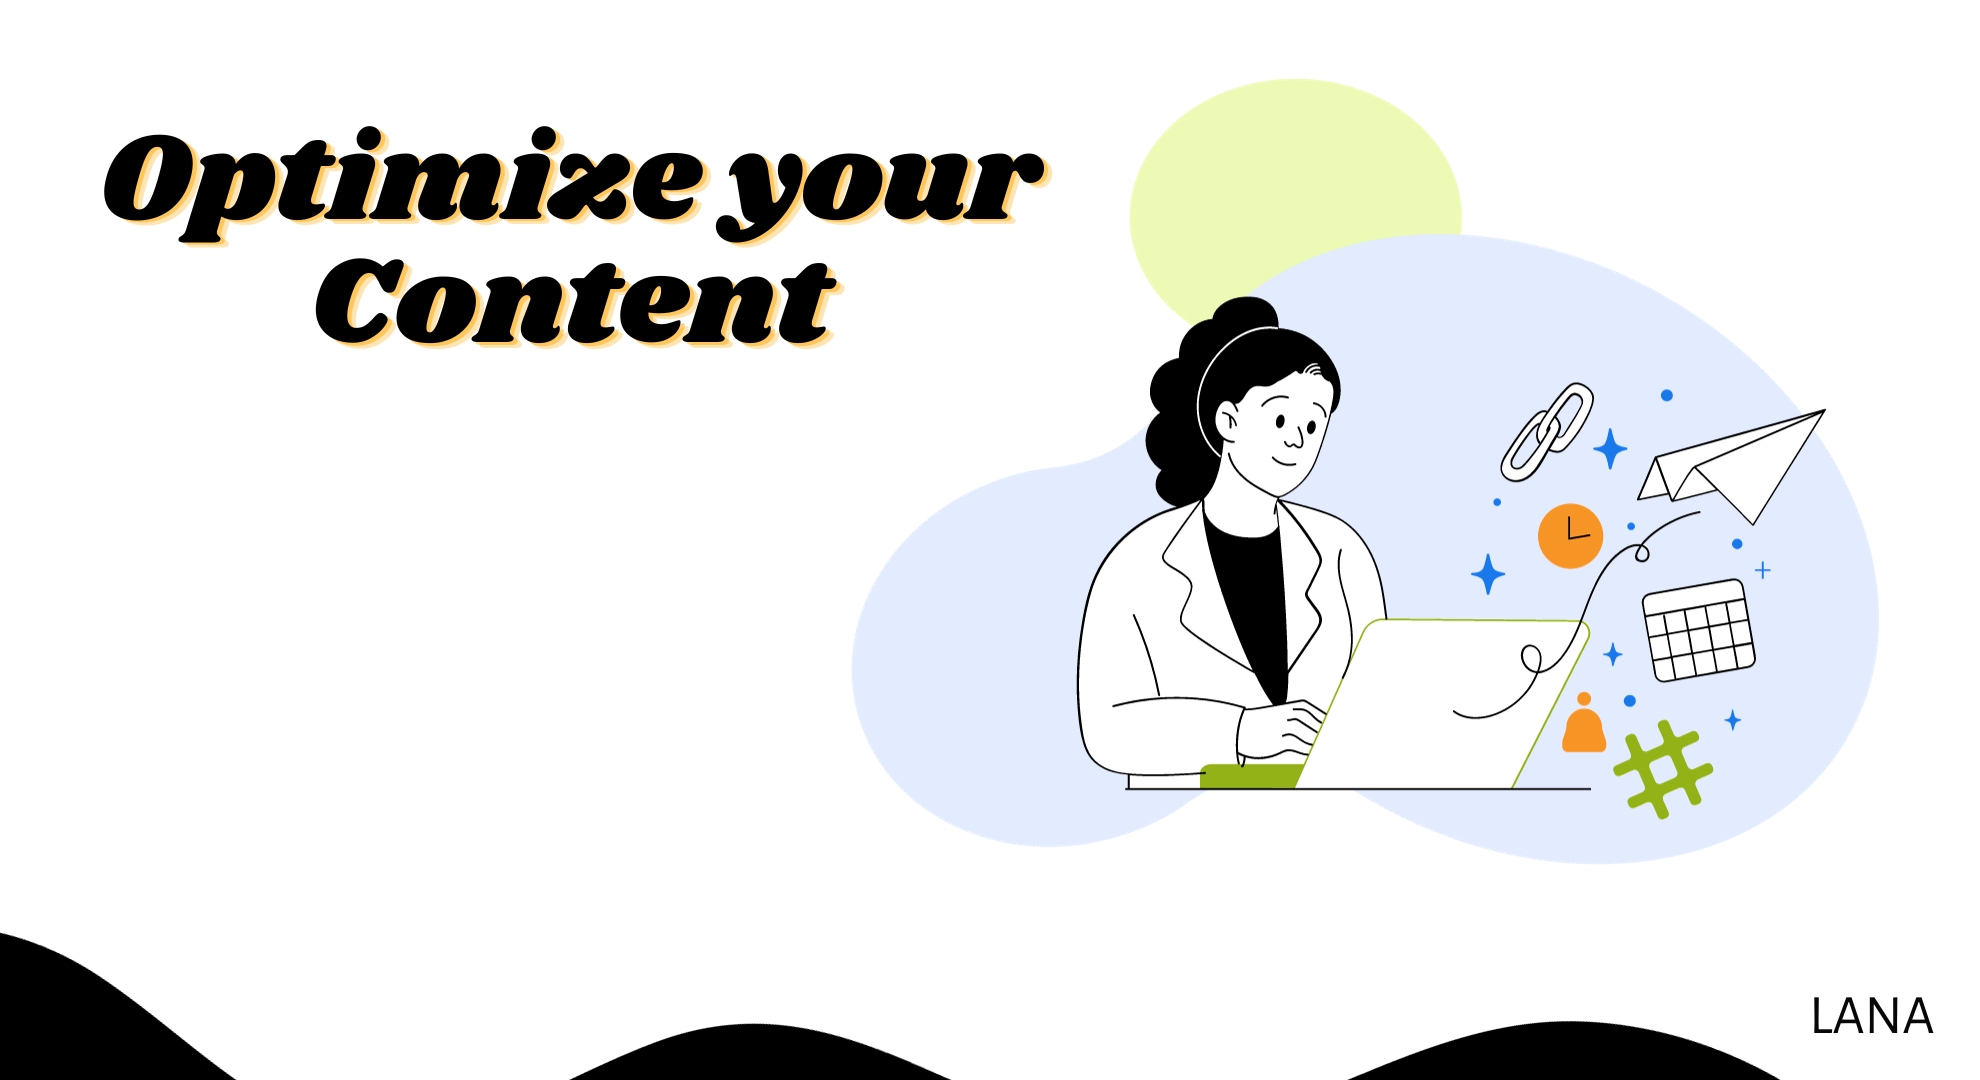 Optimize your Content